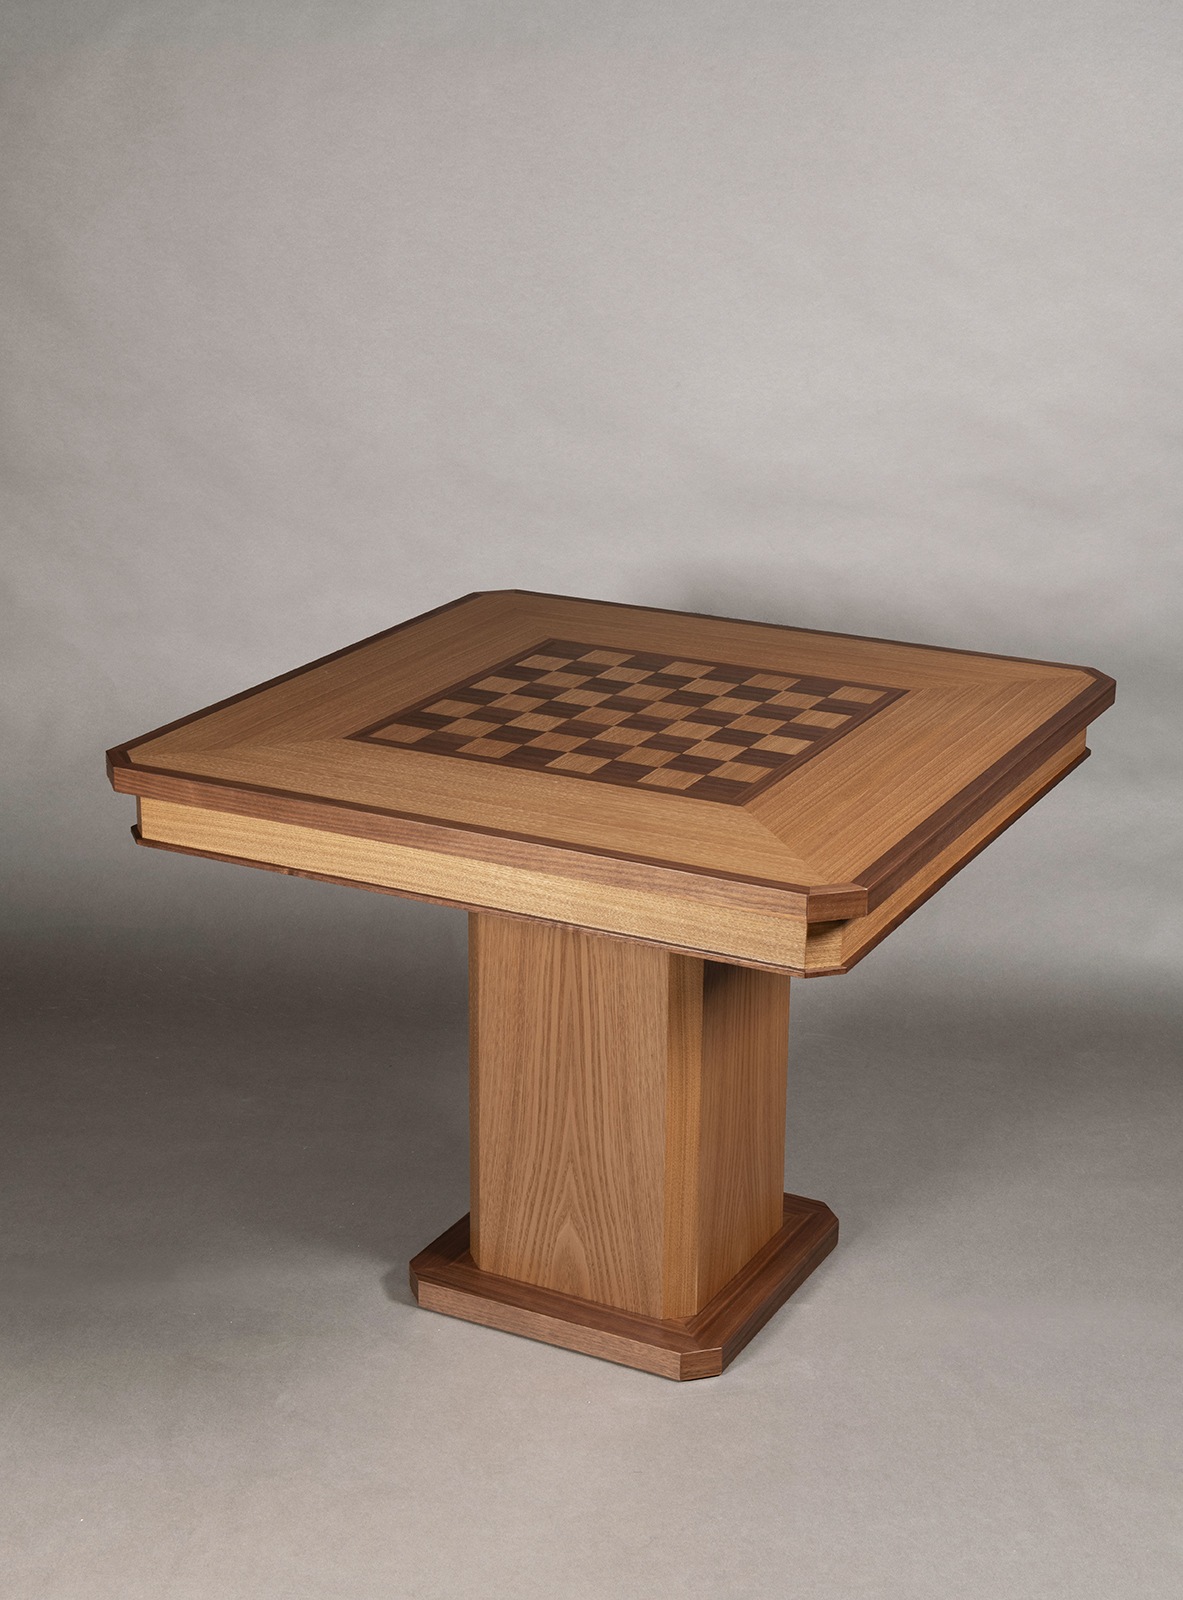 A Constructivist Game Table by ILIAD Design